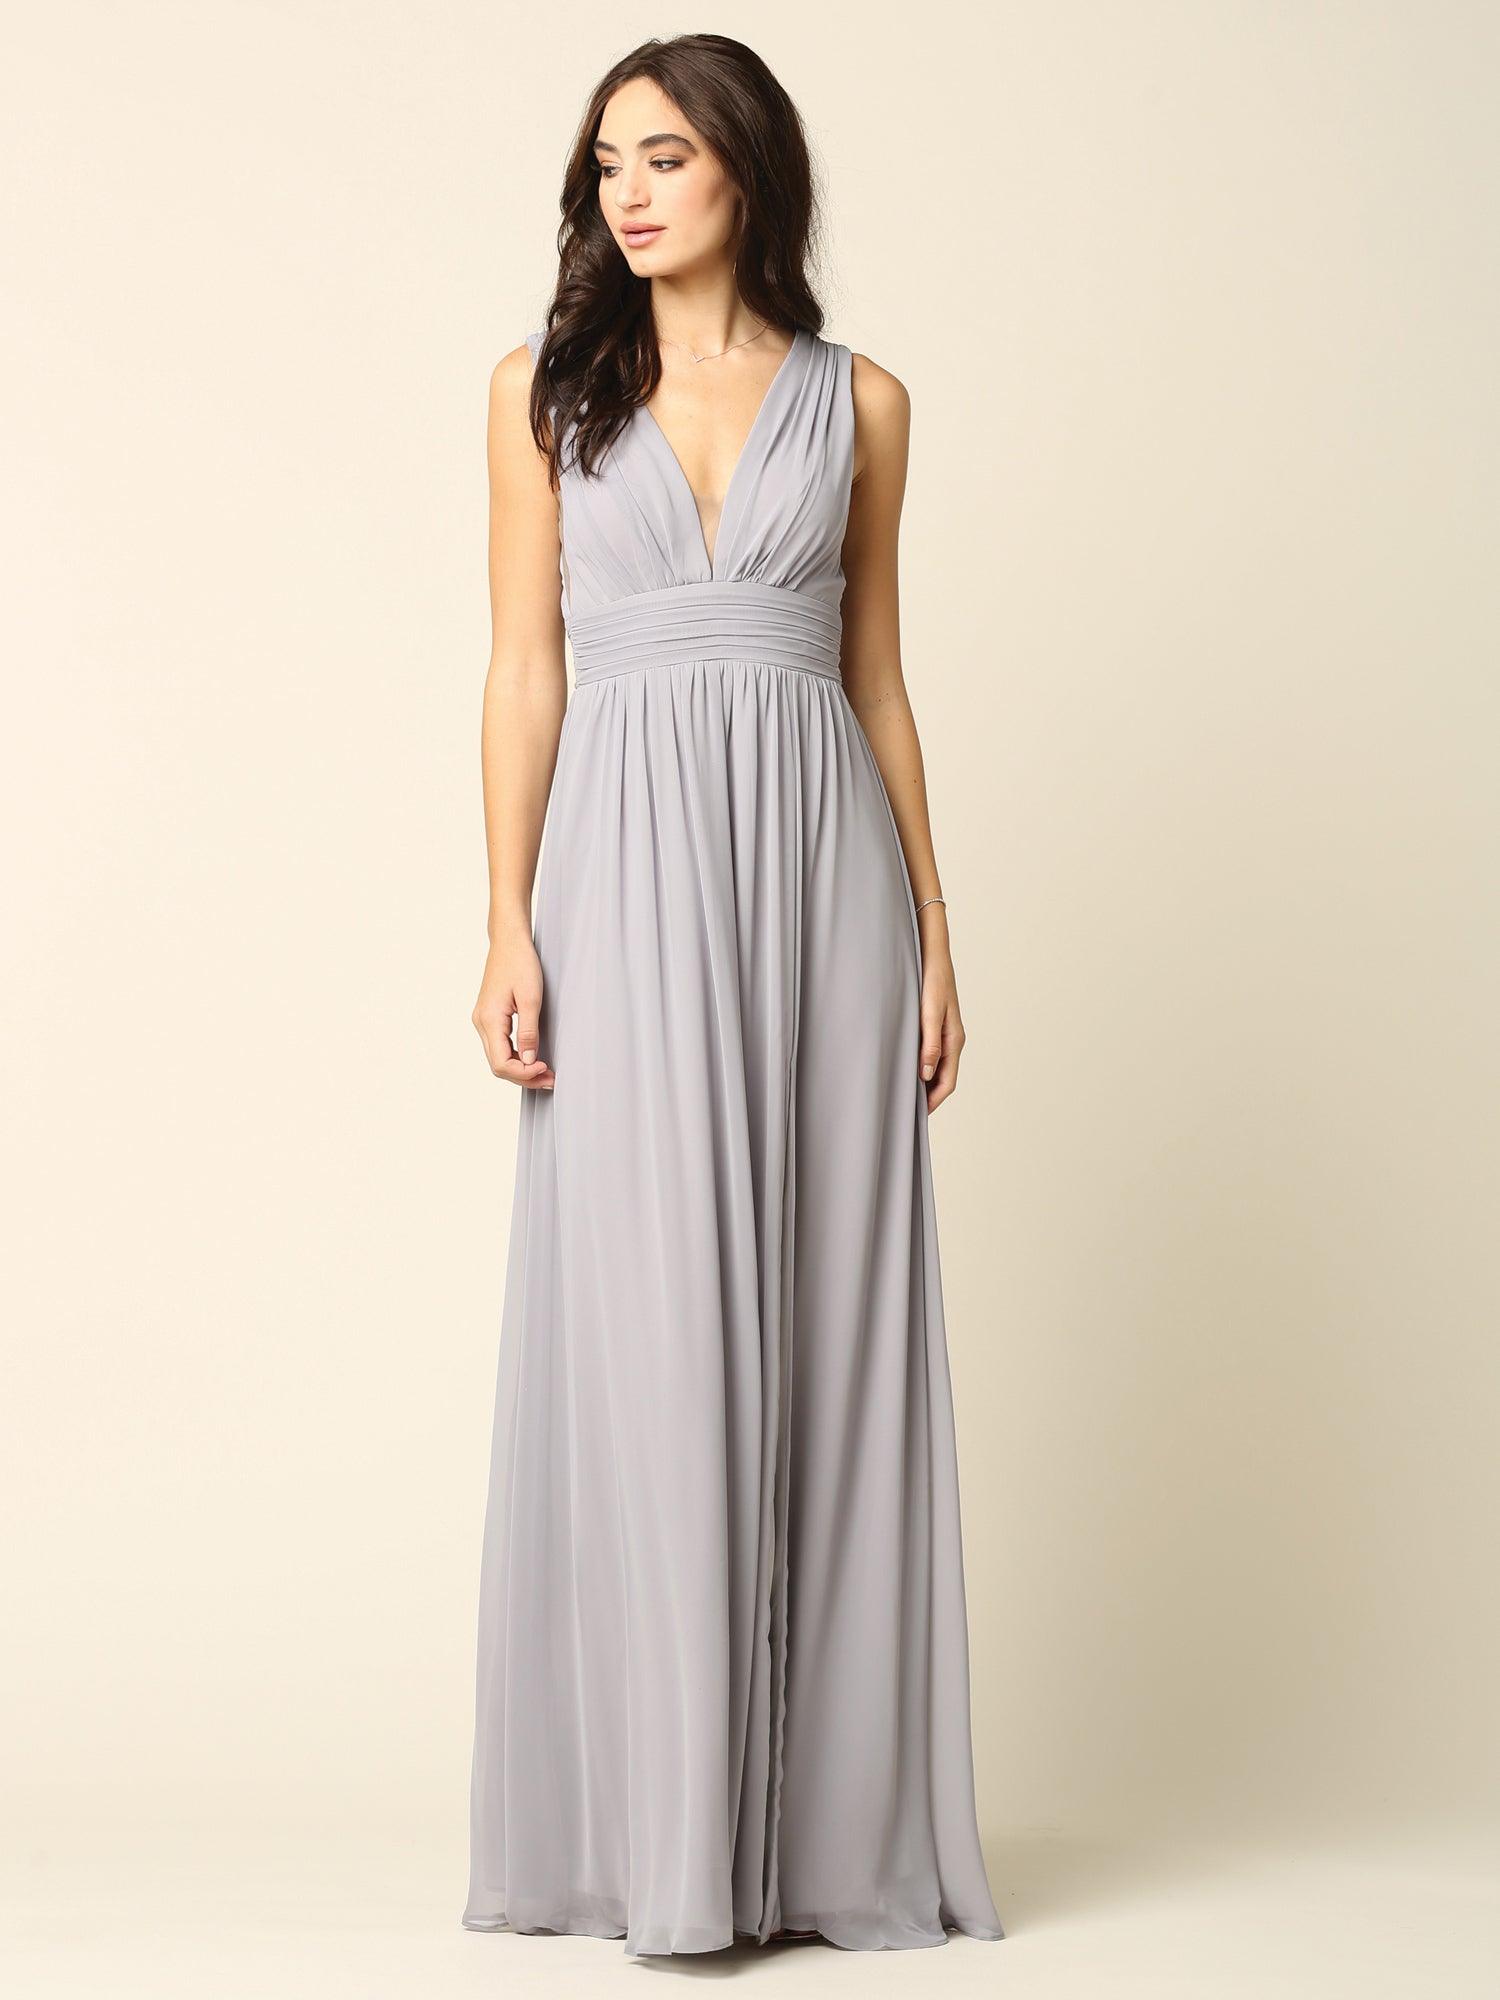 Long Sleeveless Formal Bridesmaids Slit Dress - The Dress Outlet